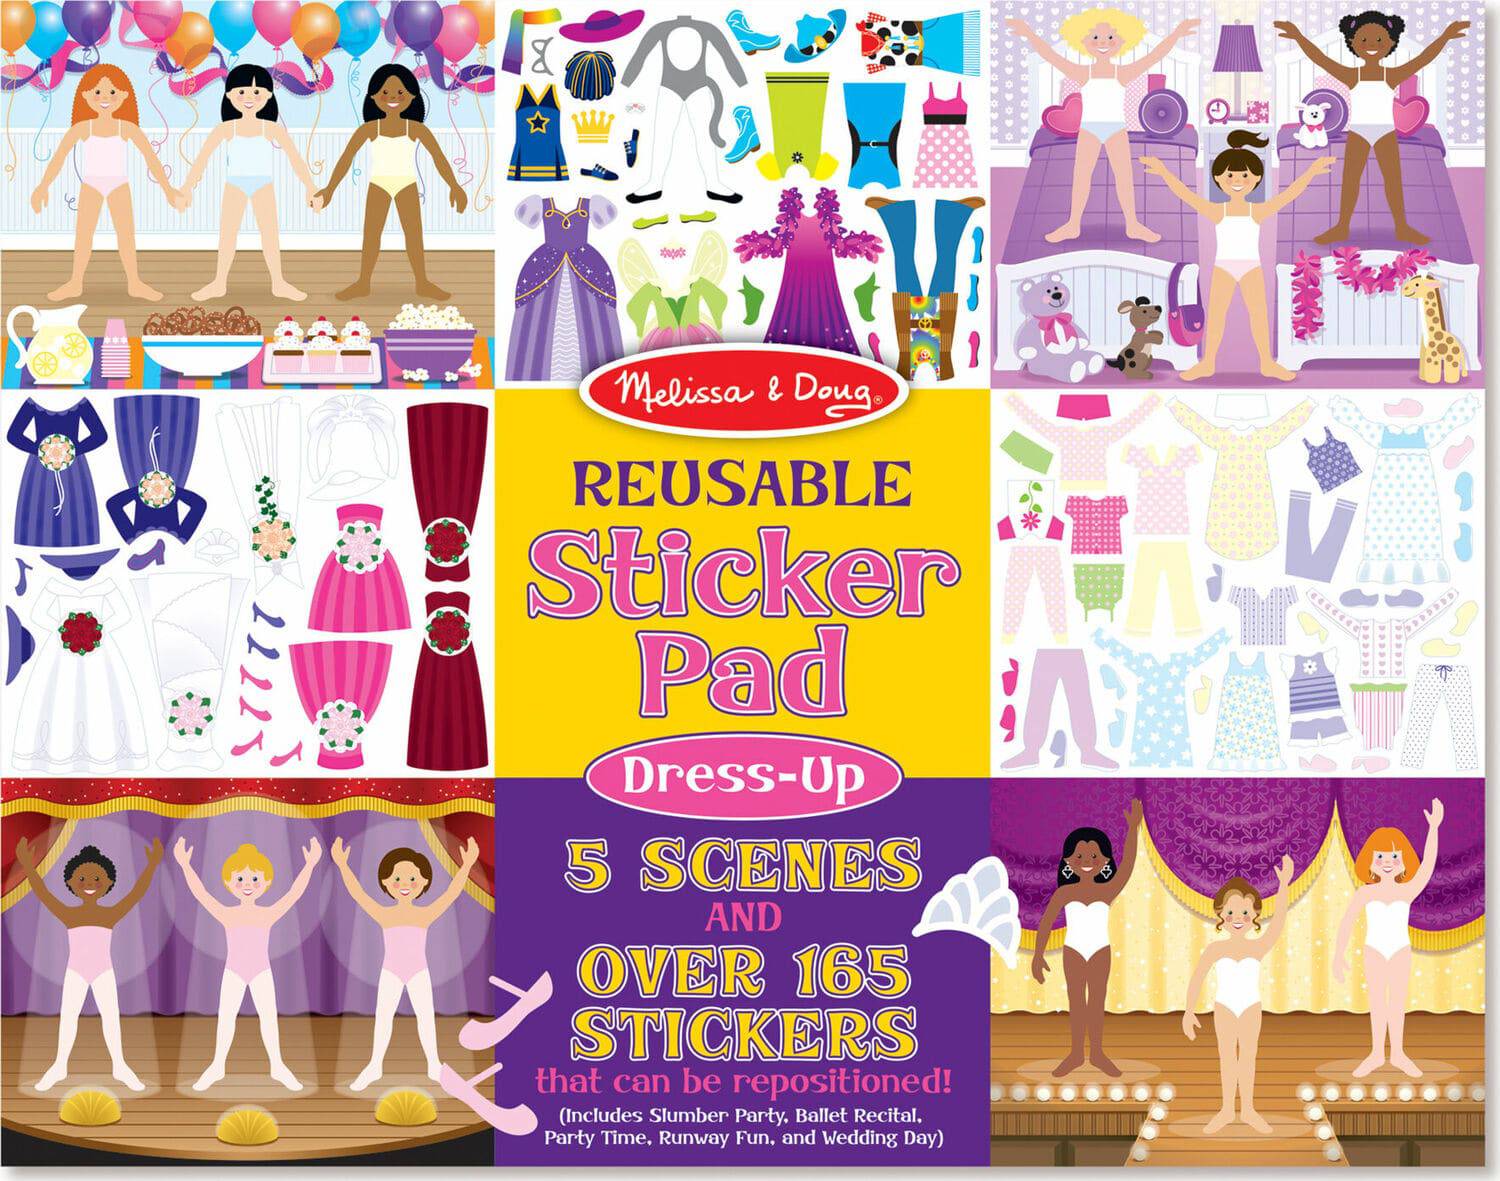 Reusable Sticker Pad - A Child's Delight